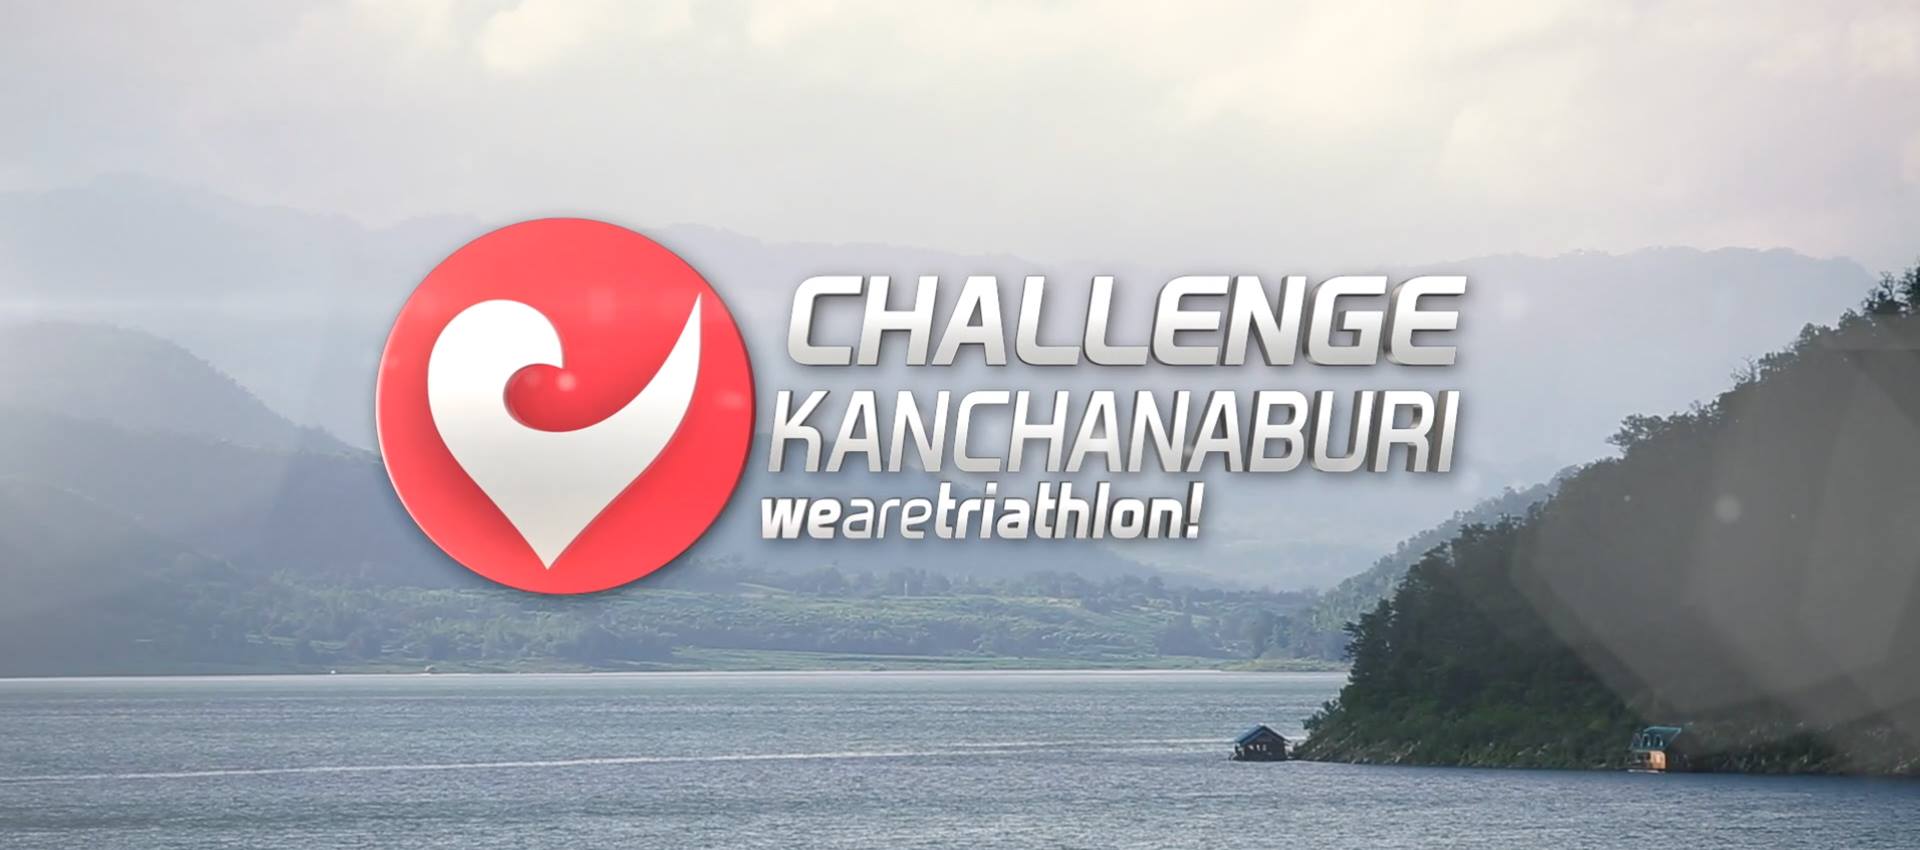 Challenge Kanchanaburi 2017